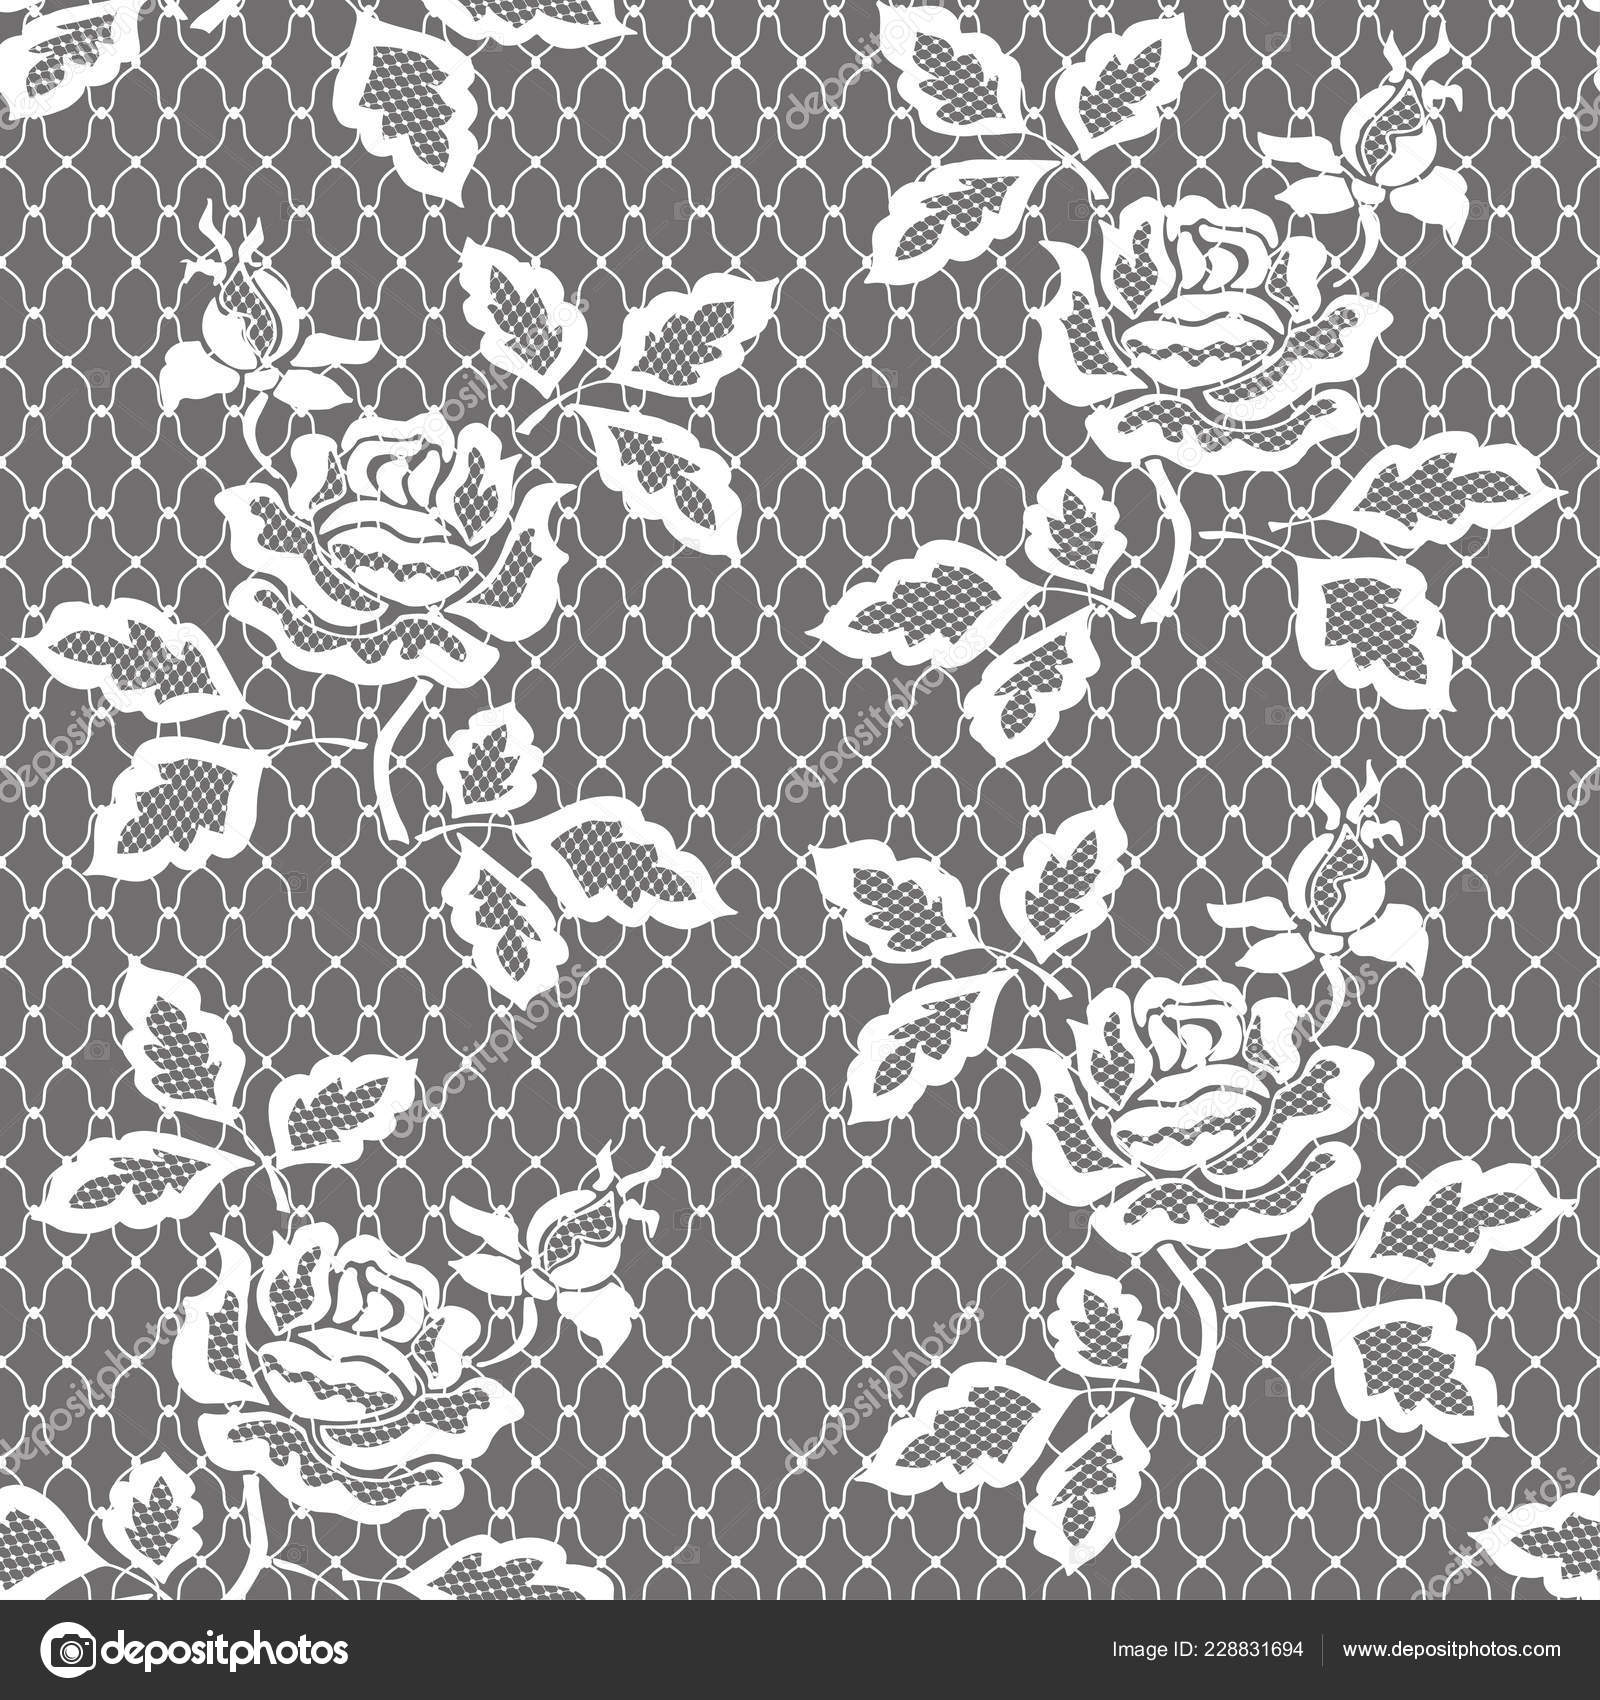 https://st4.depositphotos.com/19535872/22883/v/1600/depositphotos_228831694-stock-illustration-white-seamless-lace-pattern-rose.jpg